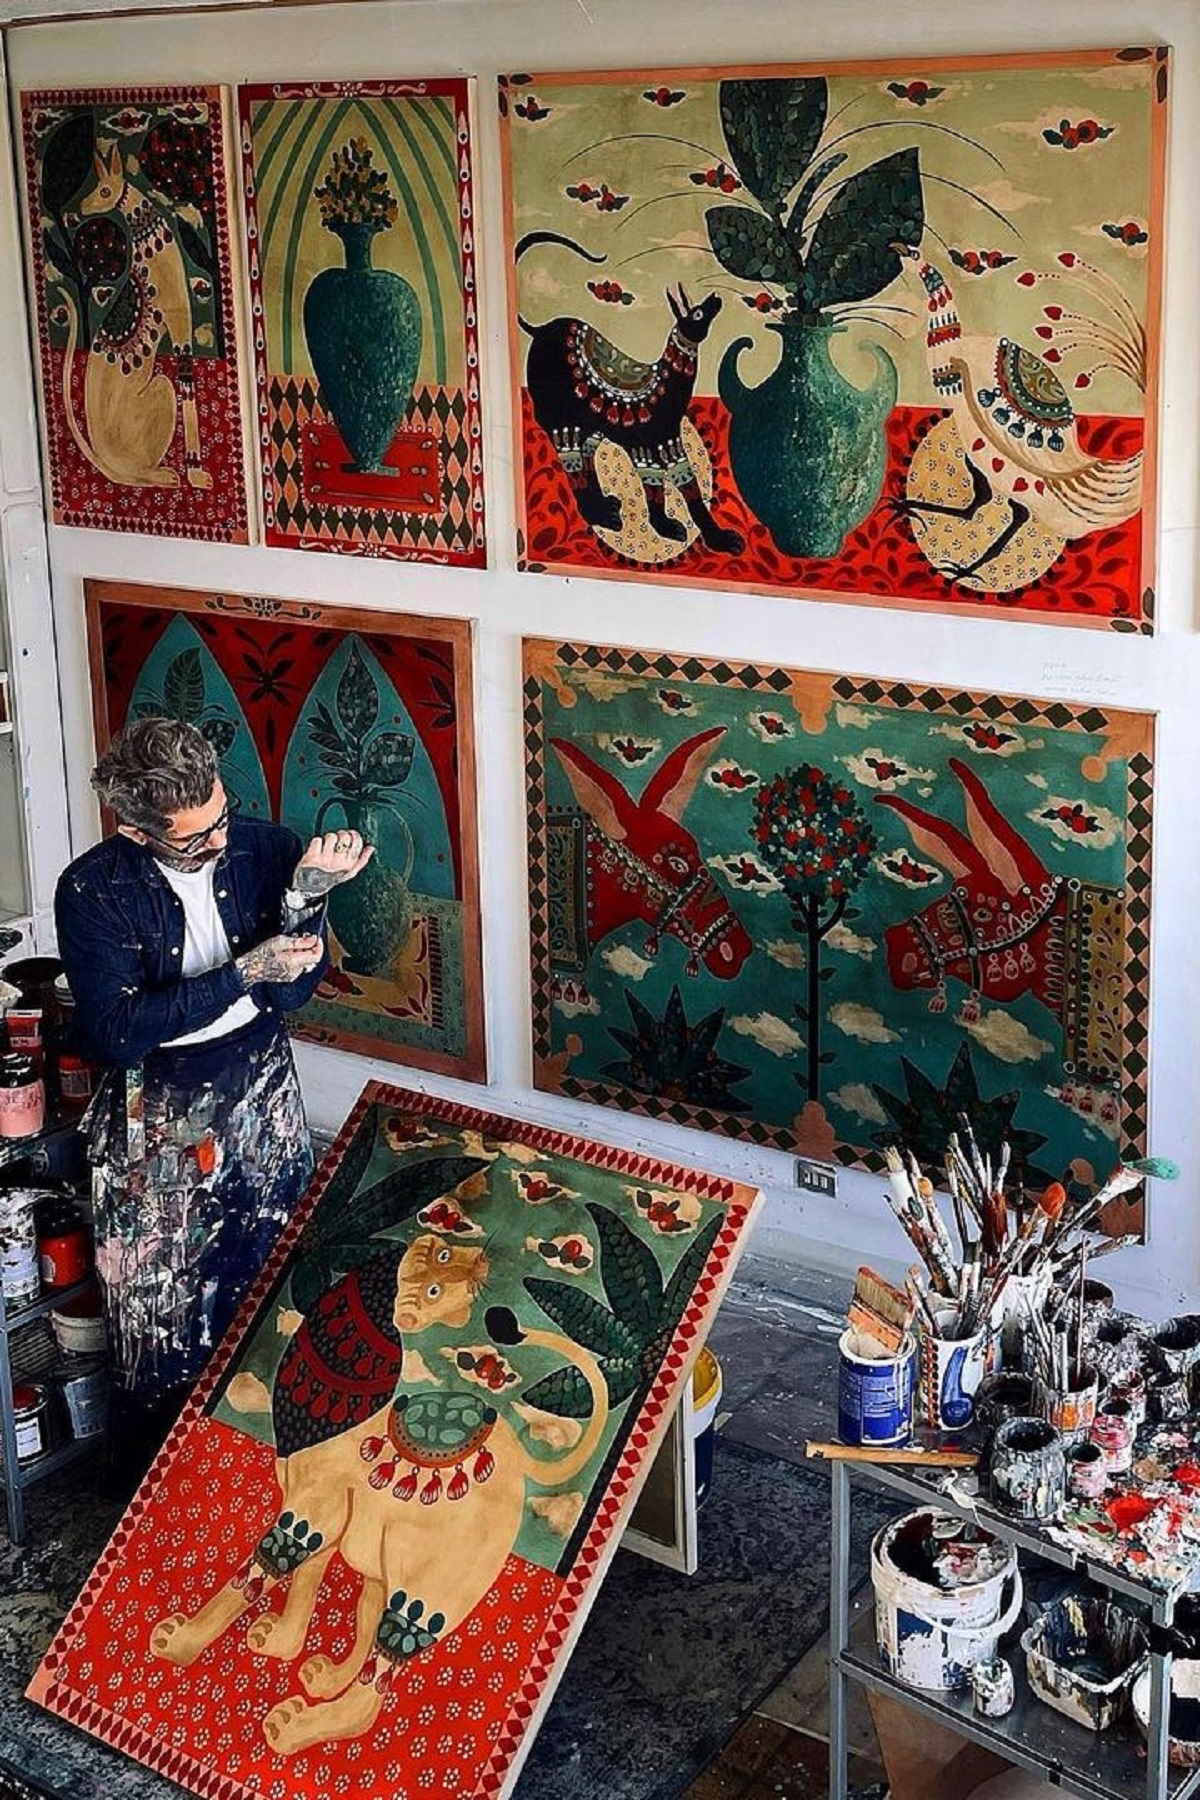 Allessandro_Florio in his studio